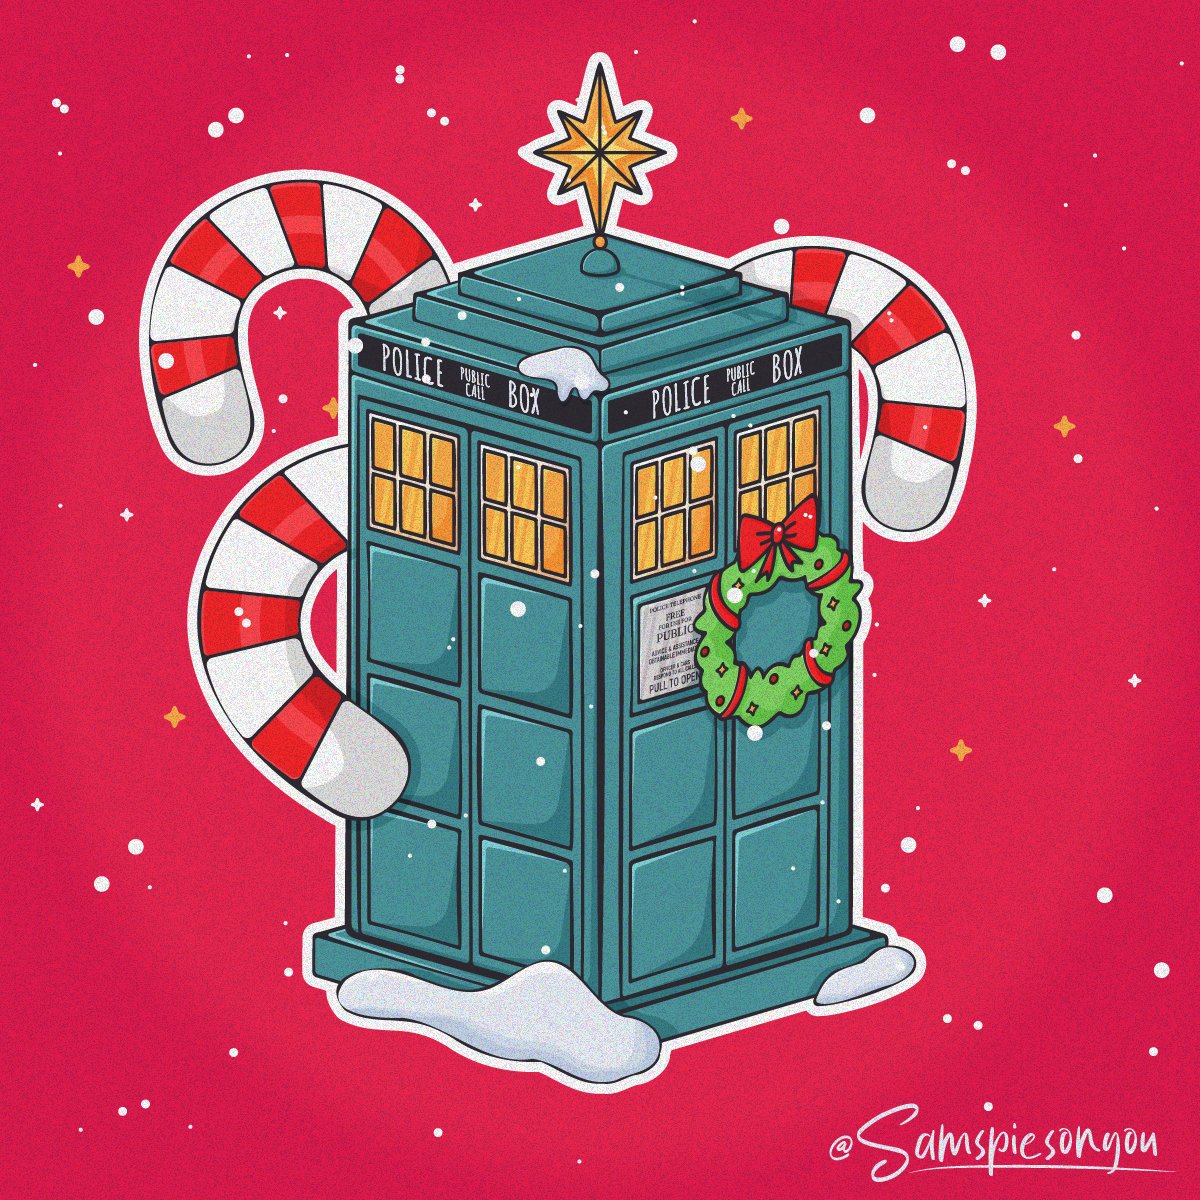 Merry Xmas!🎄
#xmas #doctorwho #christmasart #украрт #арткозацтво